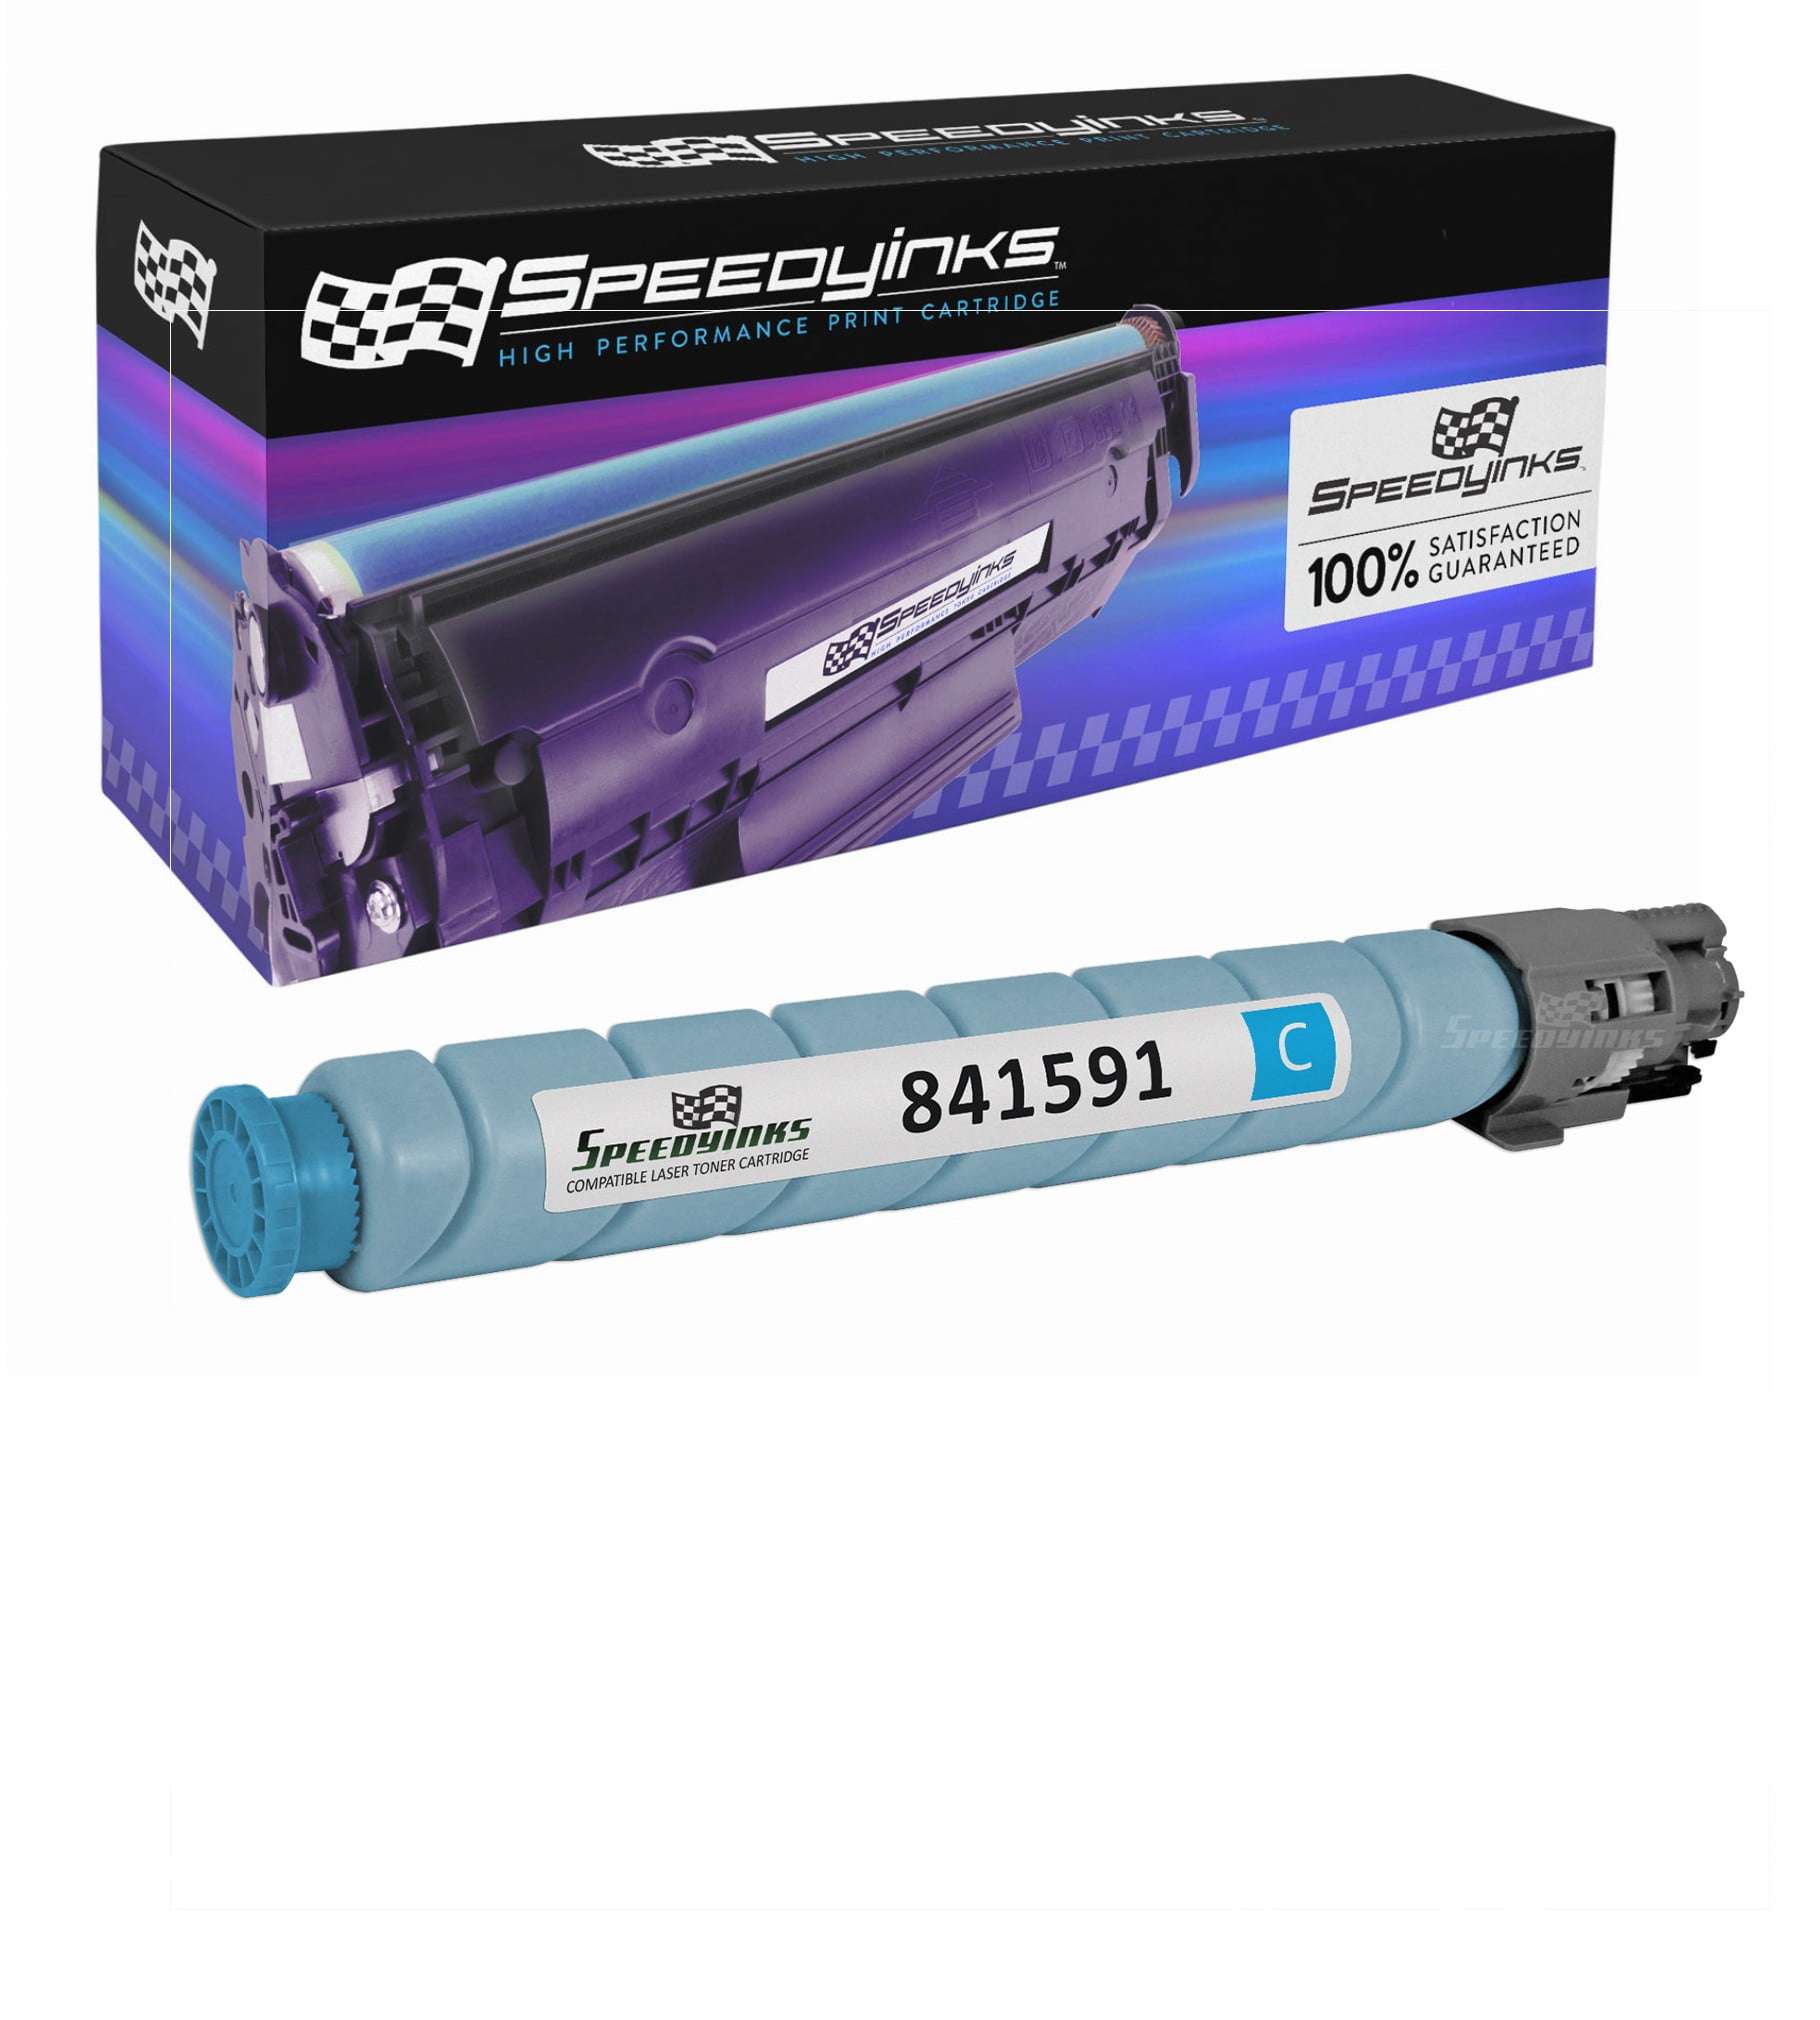 LD 841591 MP C305 Cyan Laser Toner Cartridge for Ricoh Printer 